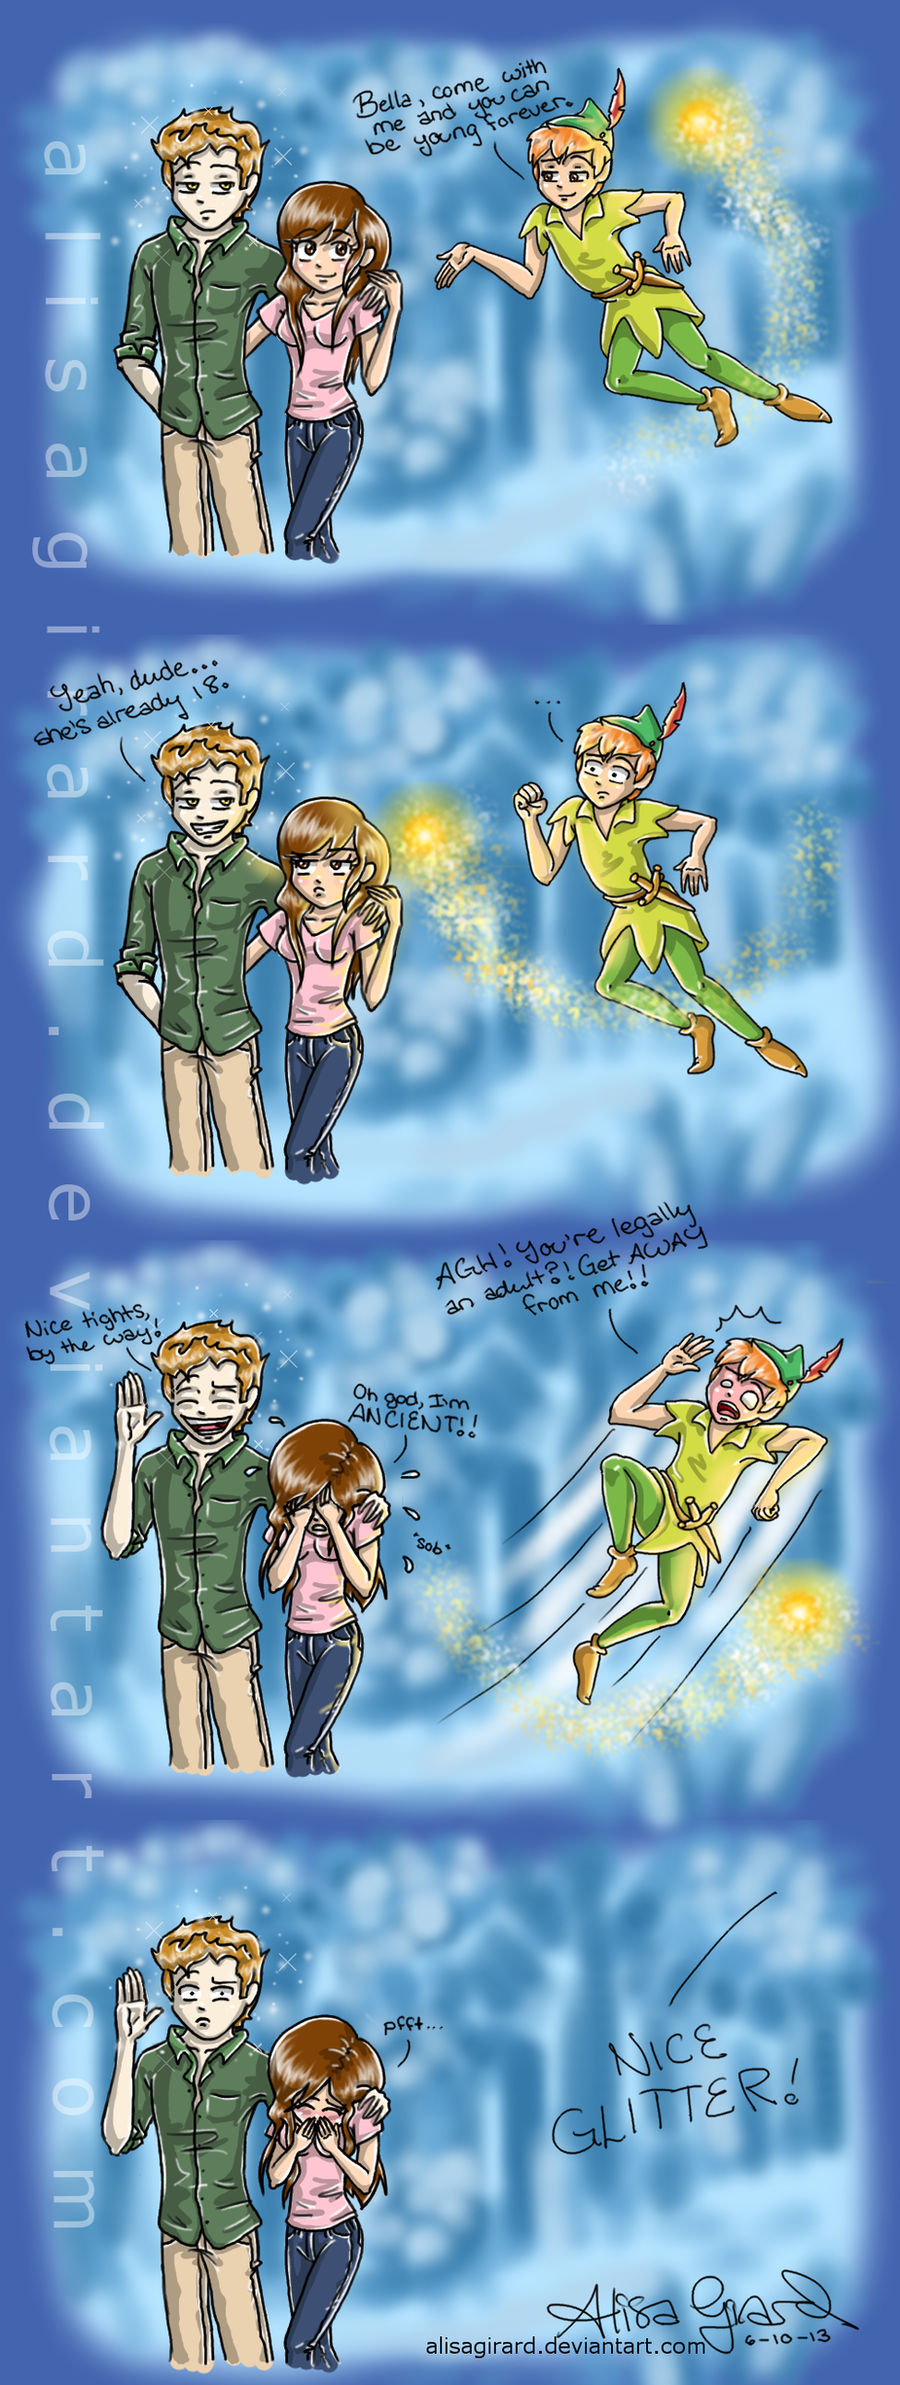 Twilight meets Peter Pan